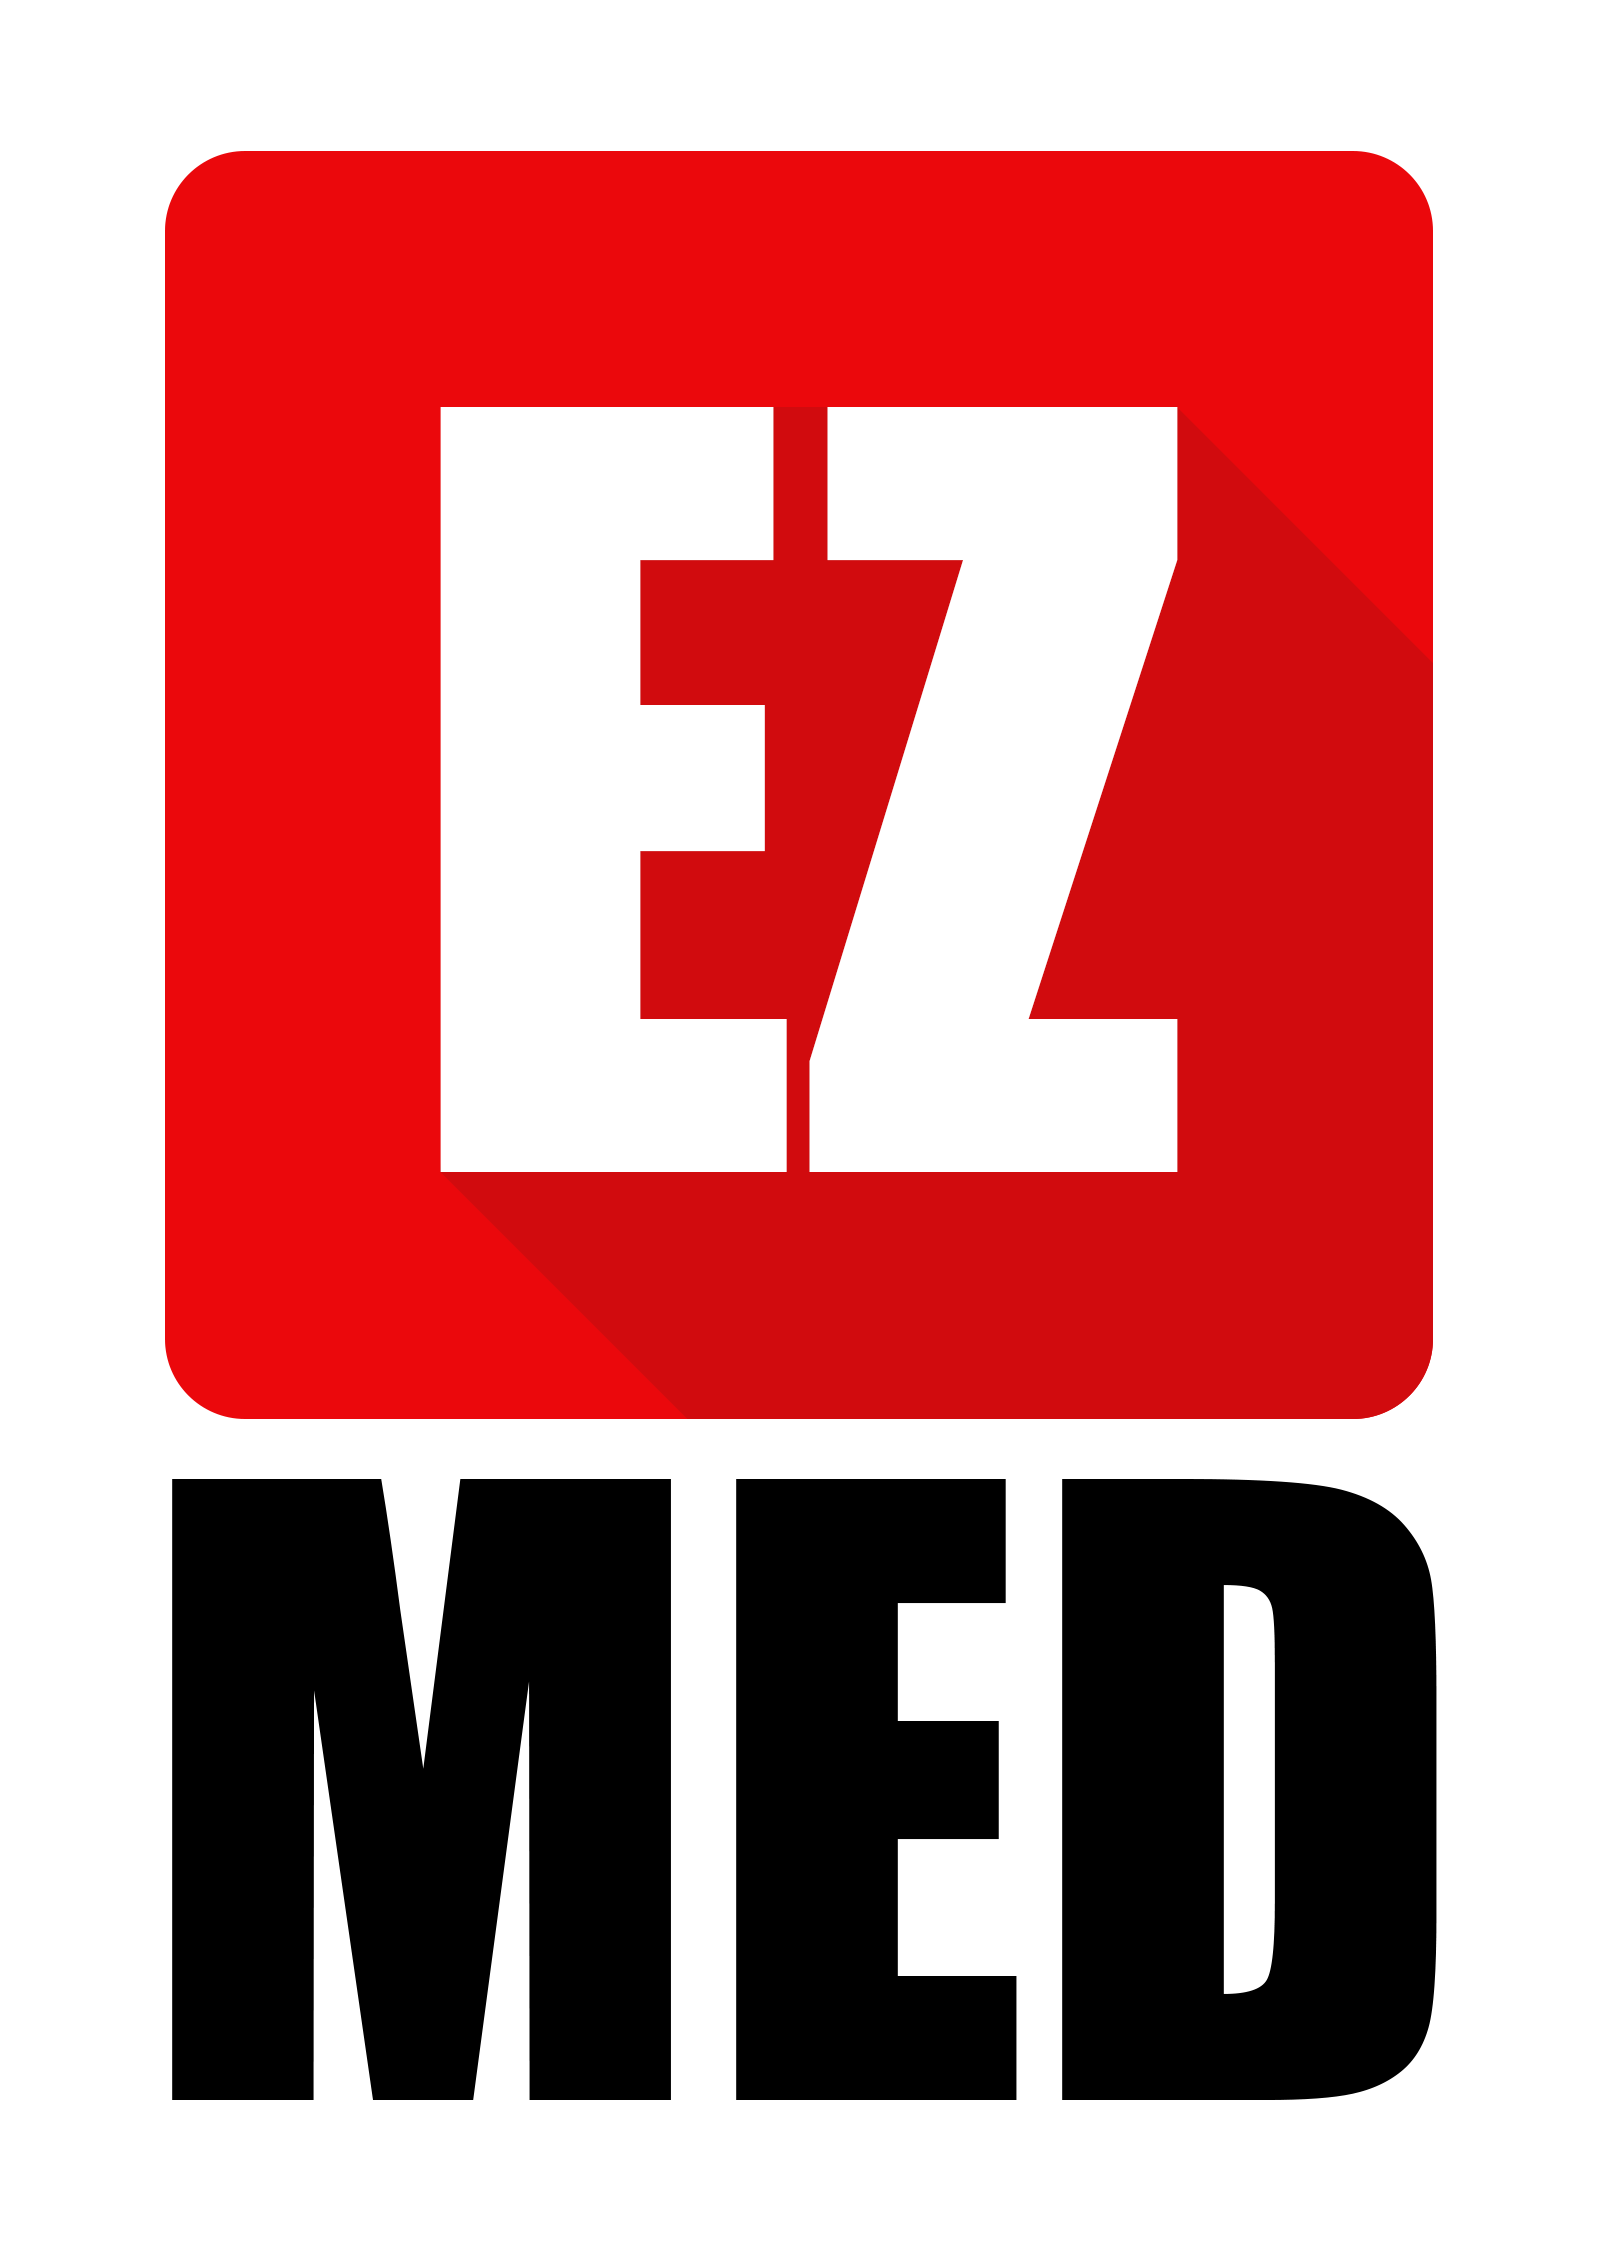 EZMed logo